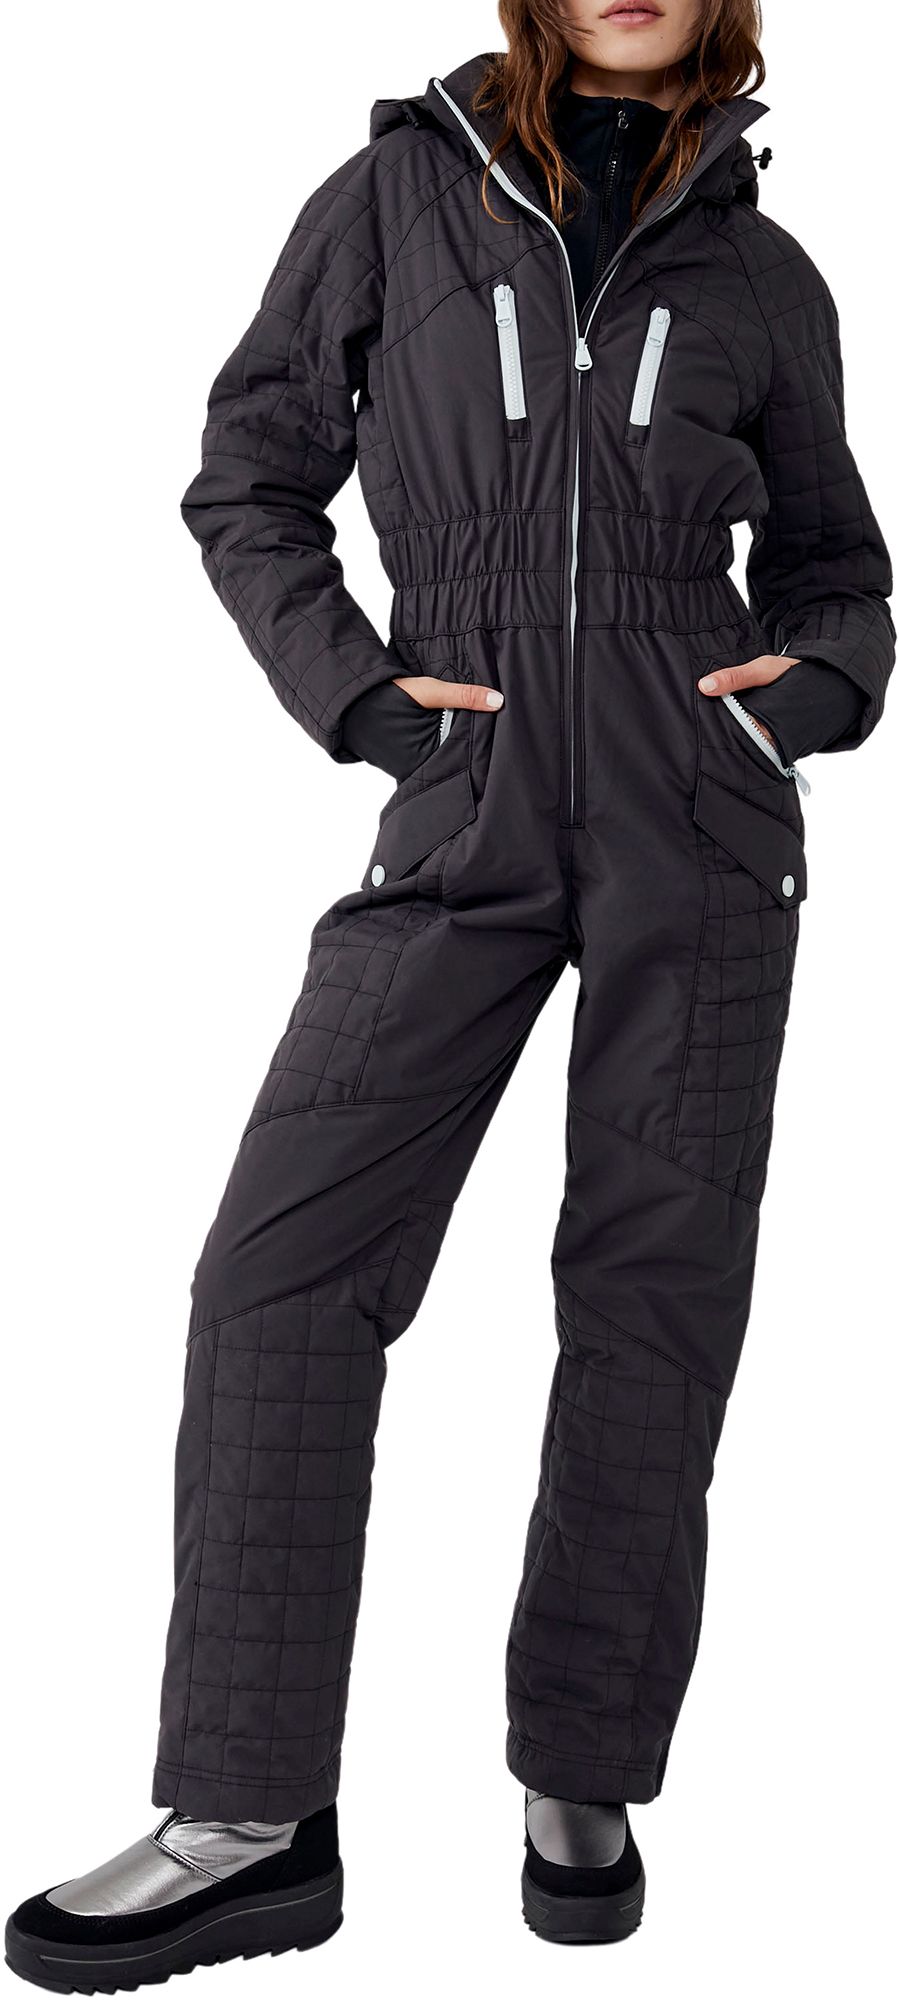 Photos - Ski Wear FP Movement Women's All Prepped Ski Suit, Small, Black 22OQIWLLPRPPDSTXXWO